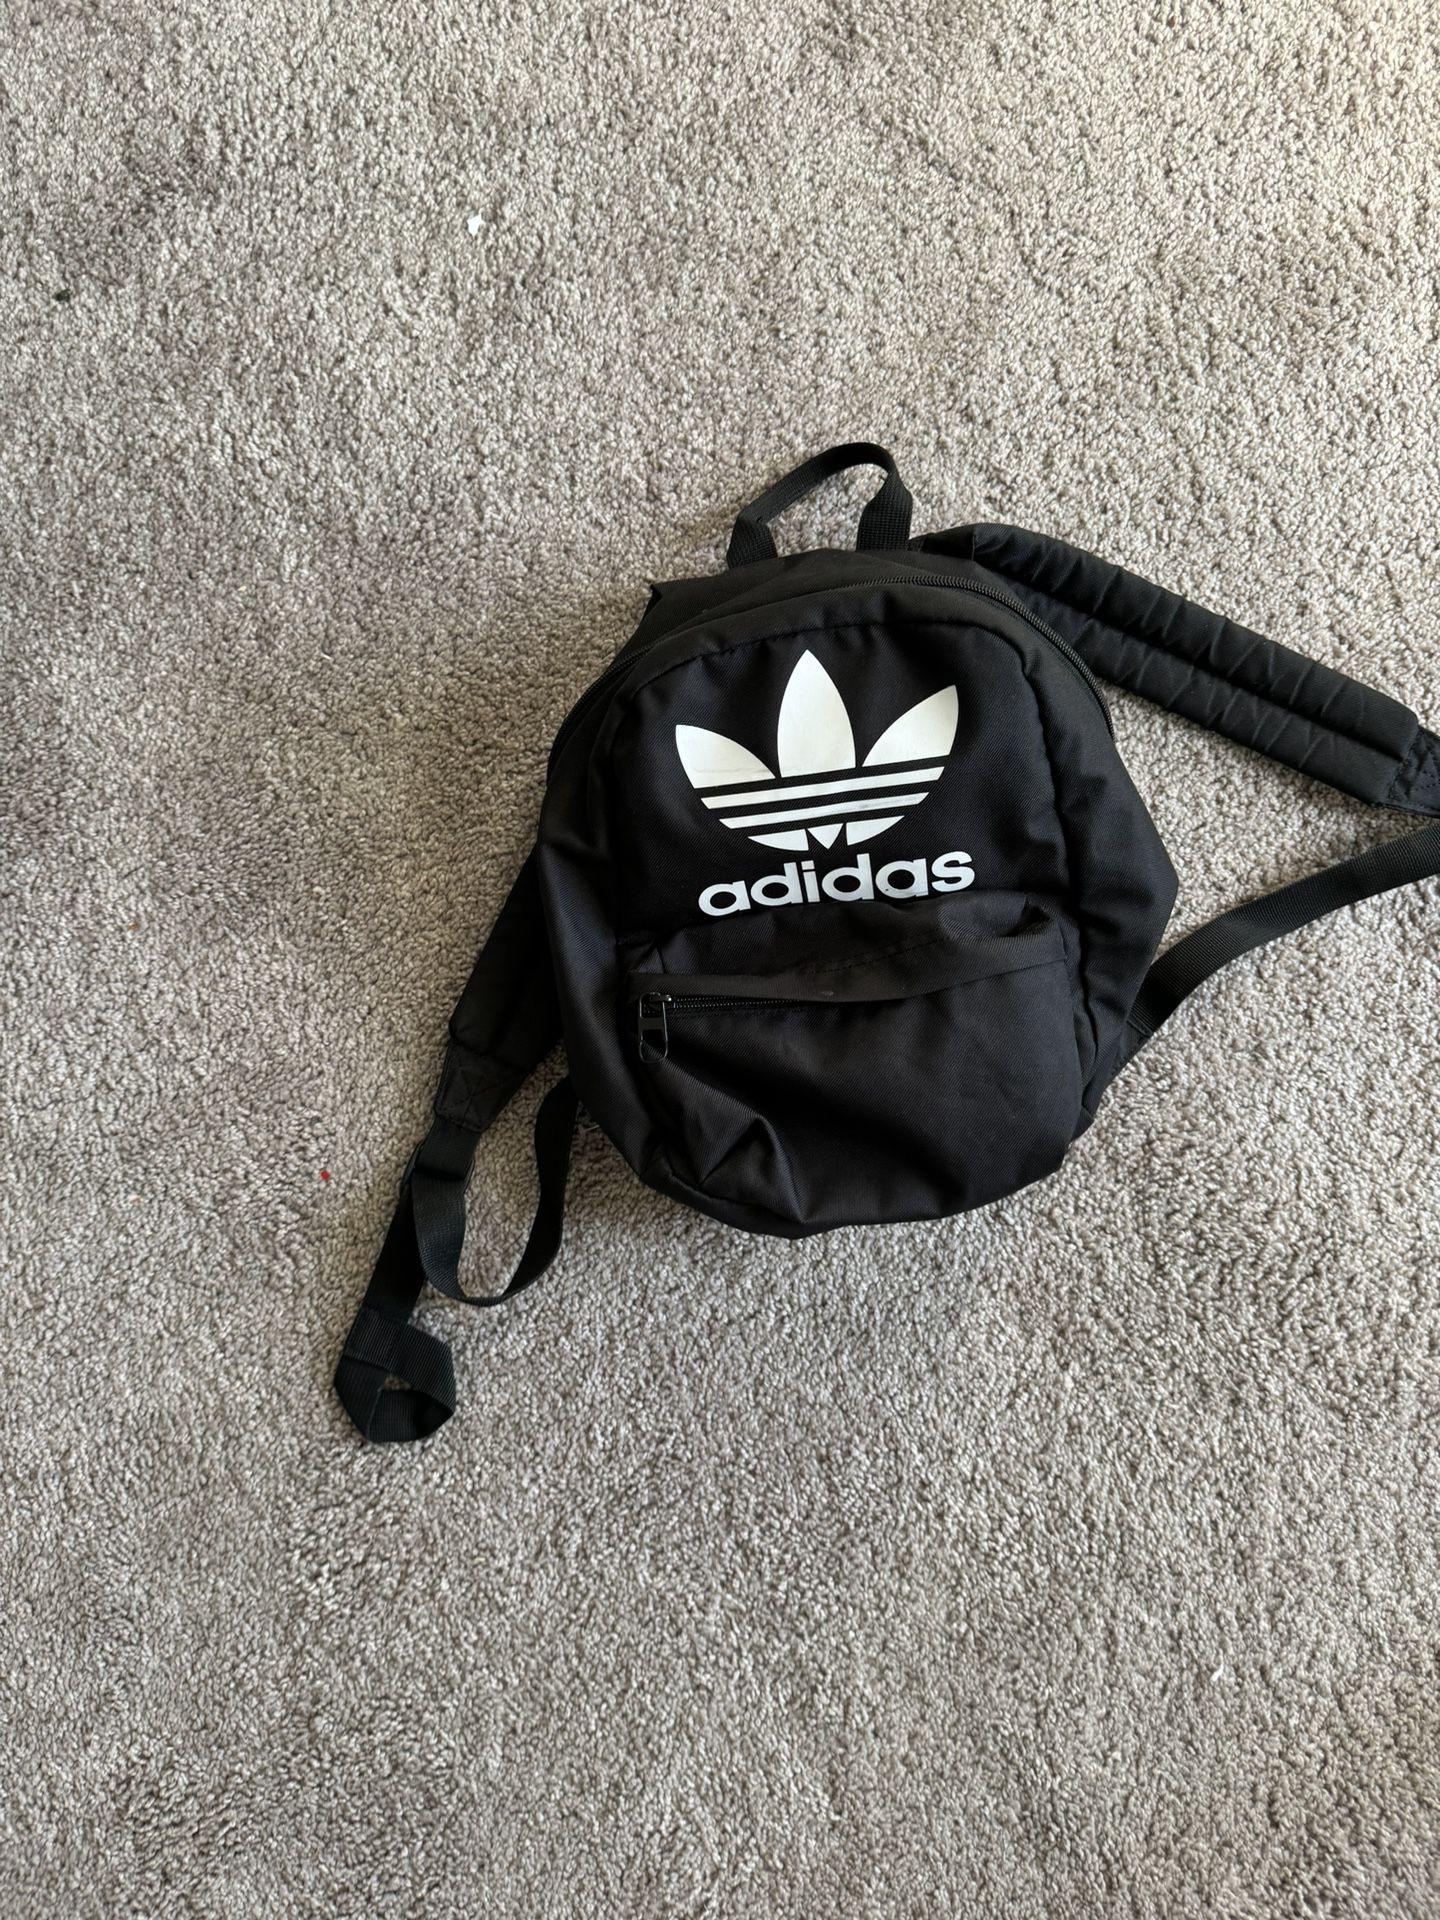 Adidas Small Travel Backpack